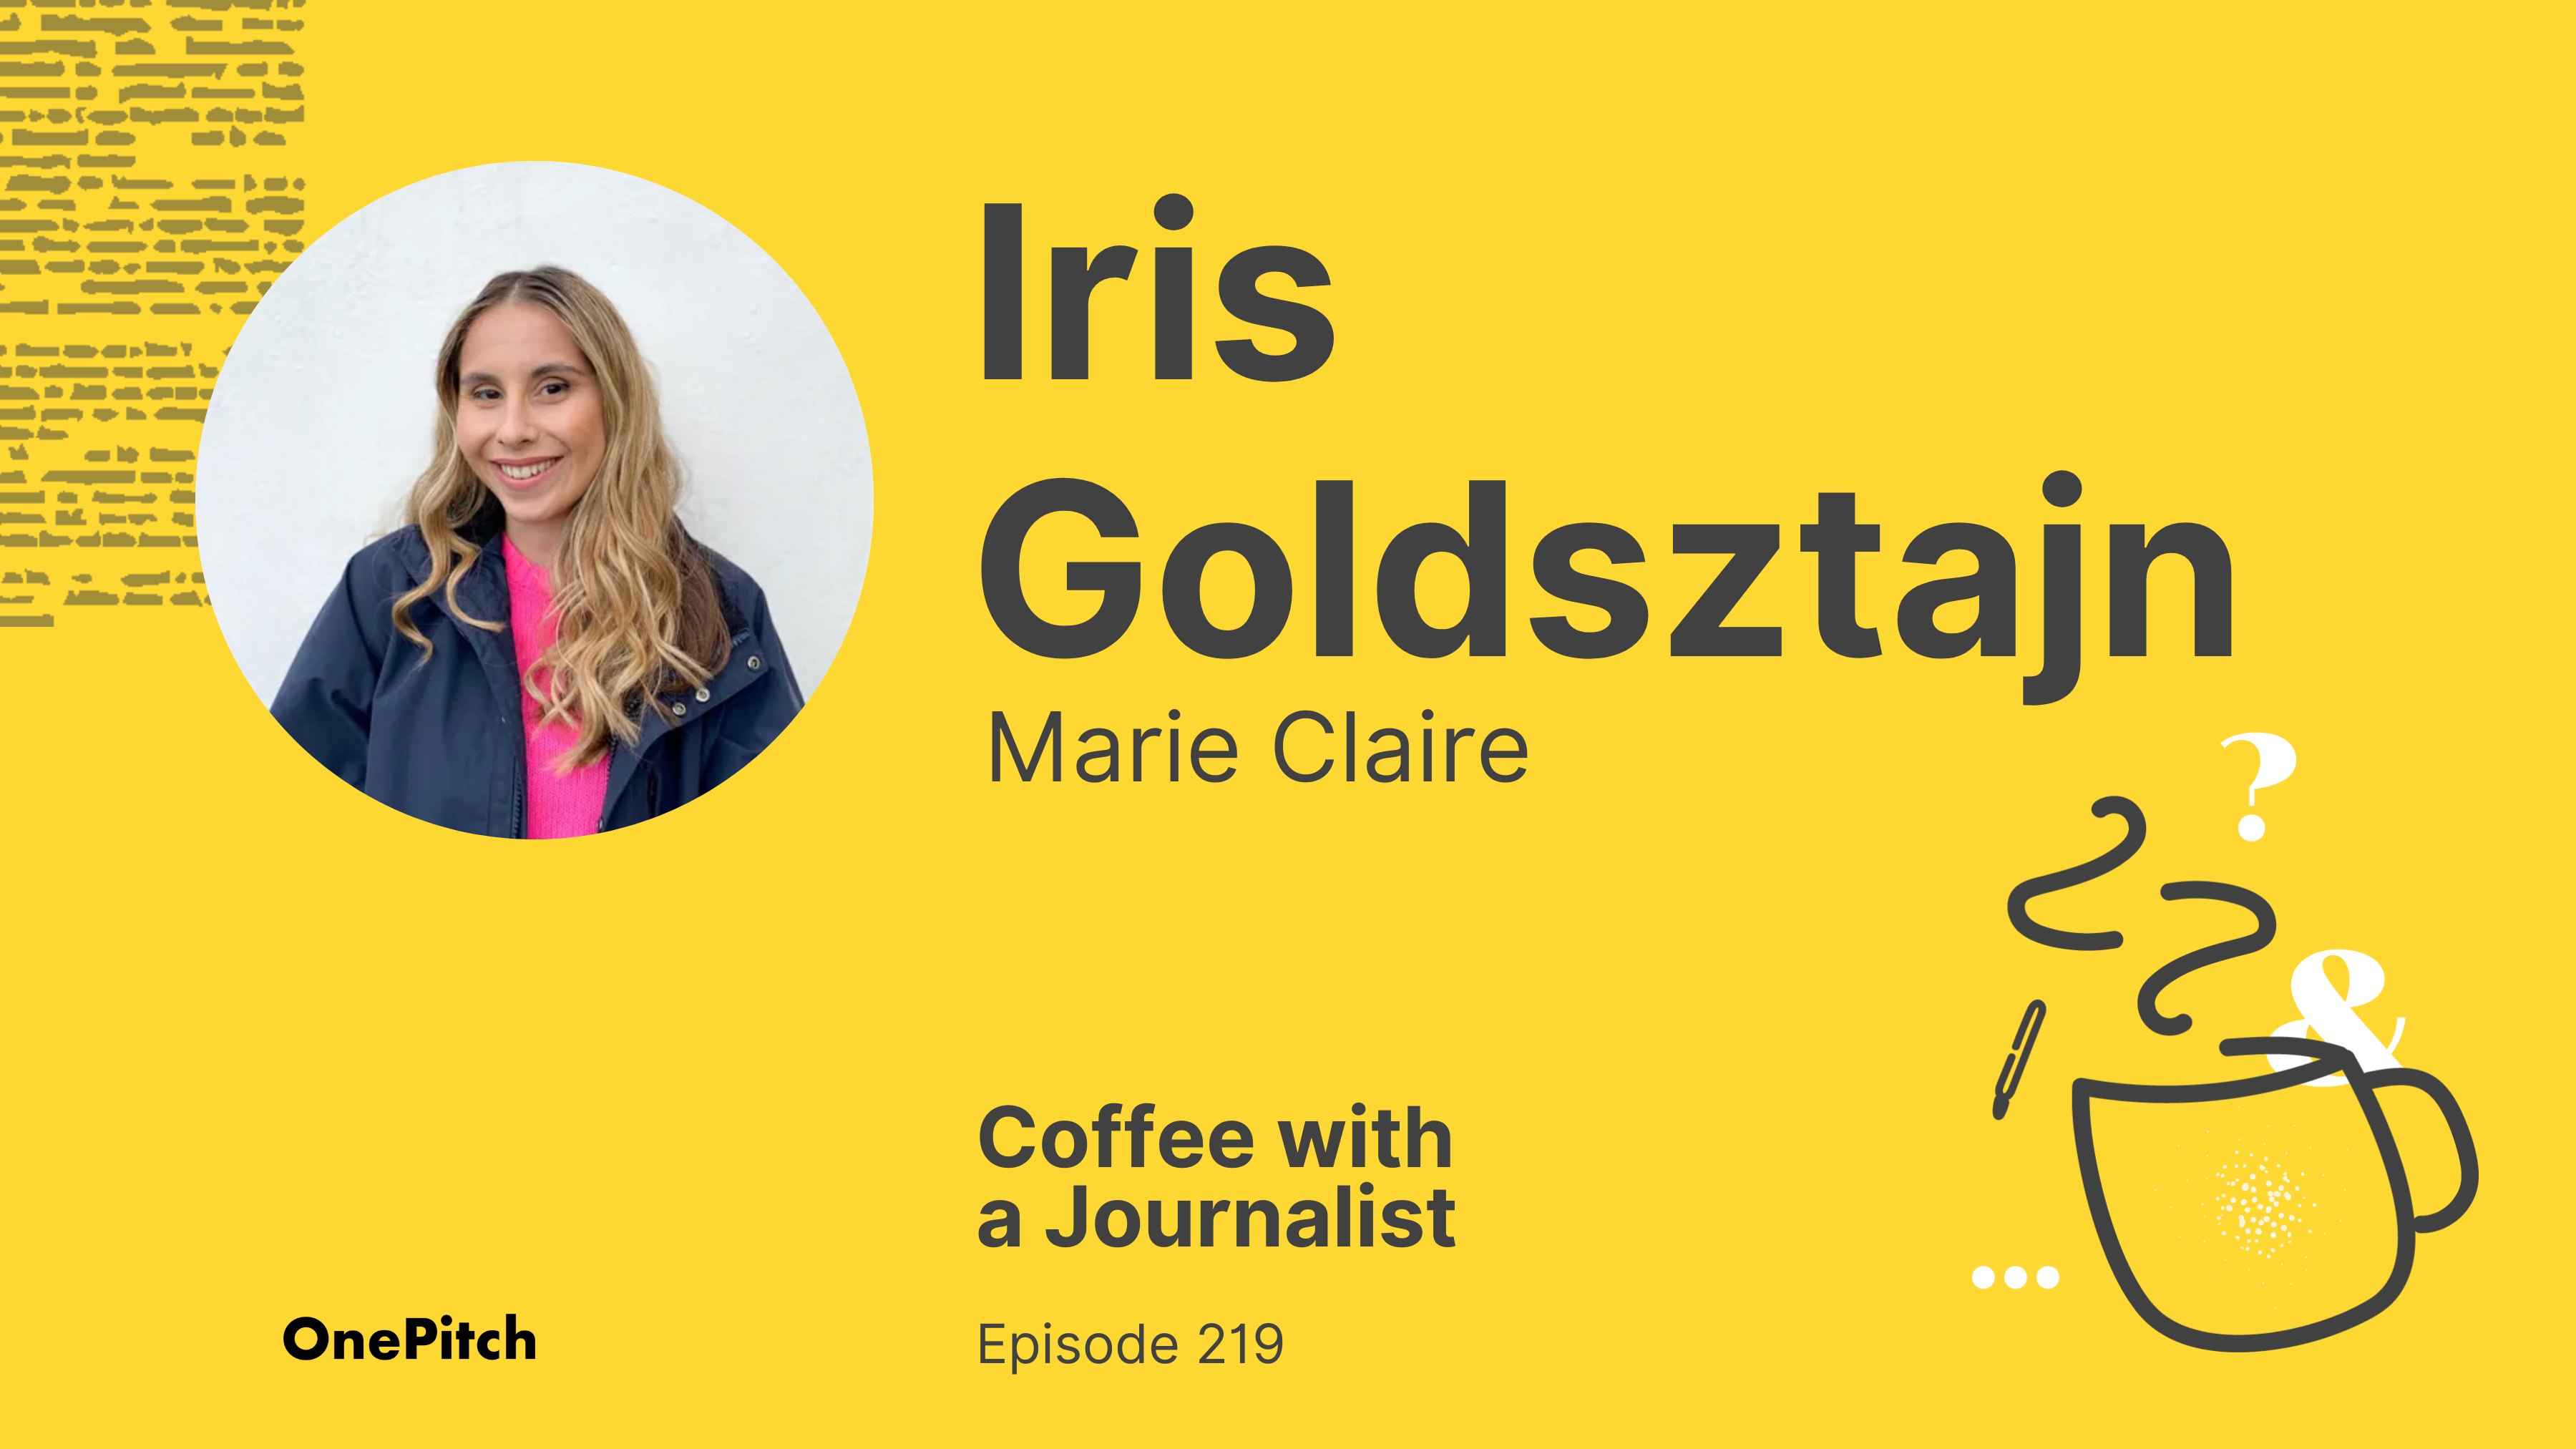 Coffee with a Journalist: Iris Goldsztajn, Marie Claire